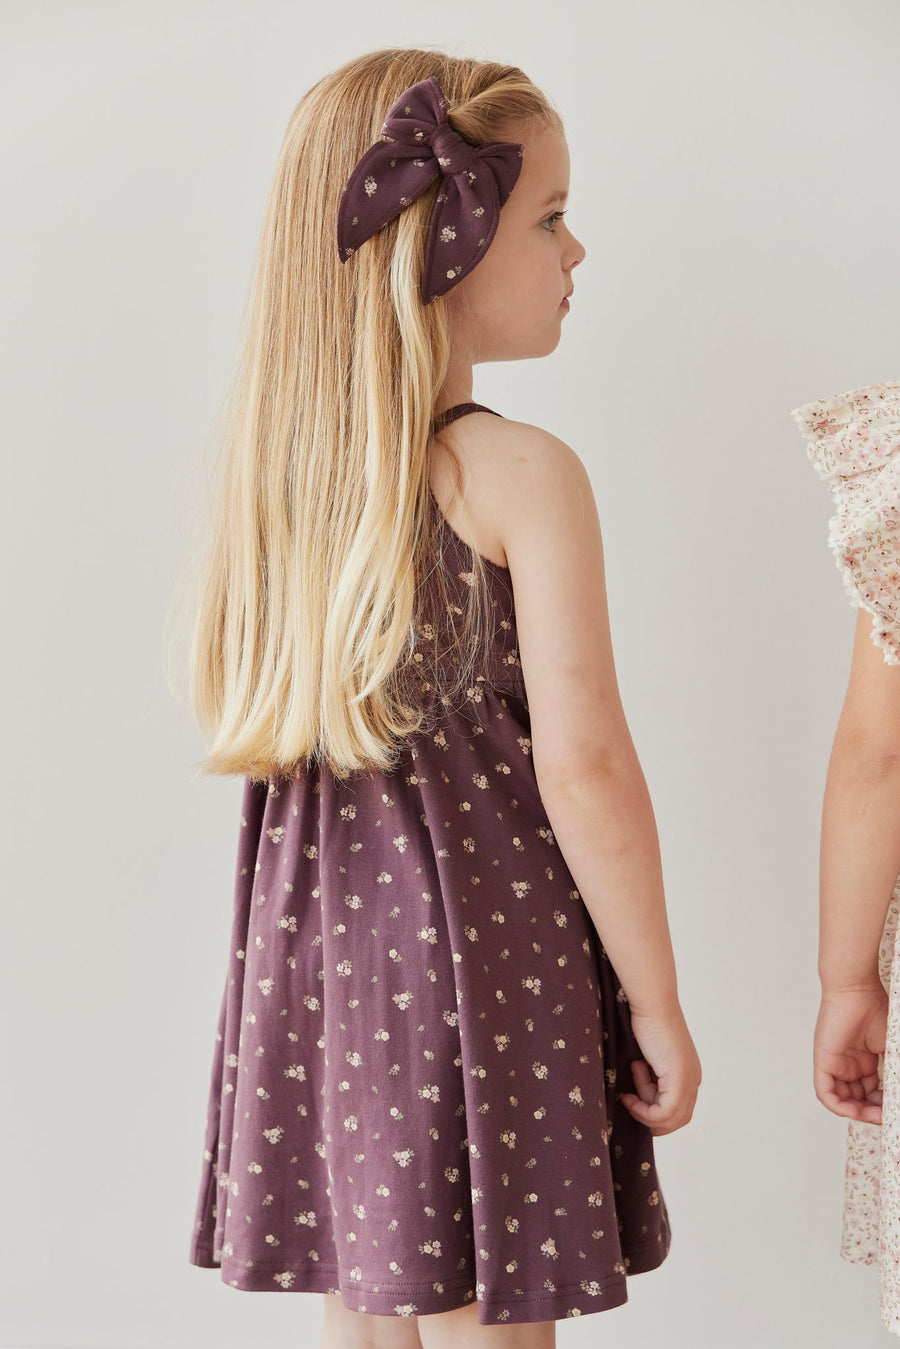 Organic Cotton Samantha Dress - Irina Fig Childrens Dress from Jamie Kay USA